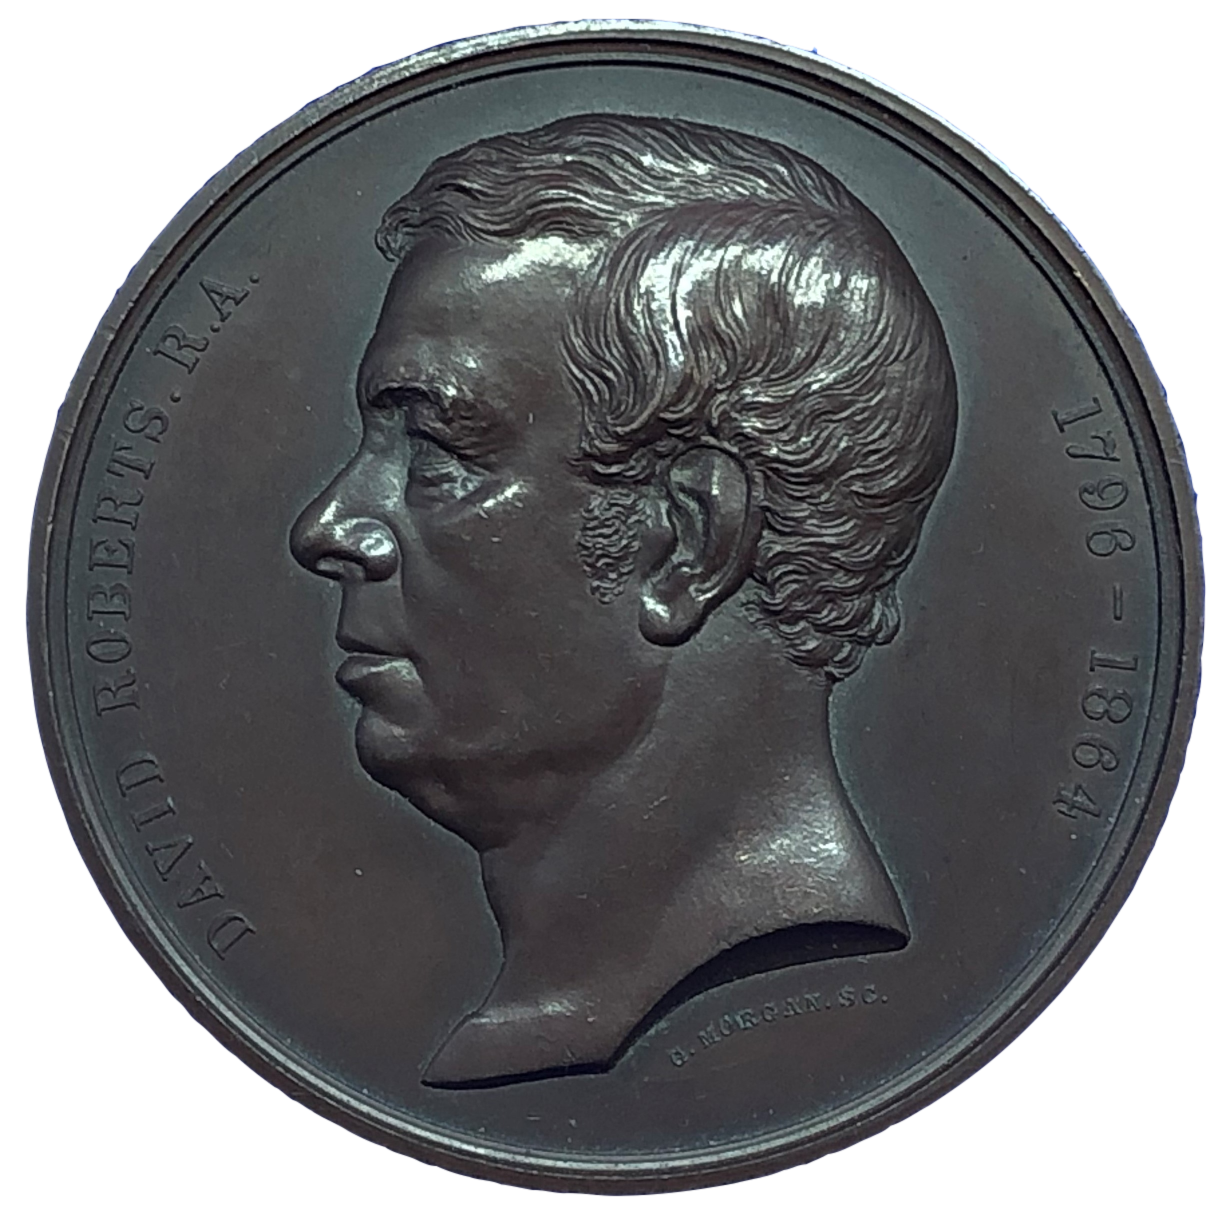 1875 David Roberts, Painter Historical Medallion by G T Morgan Obverse